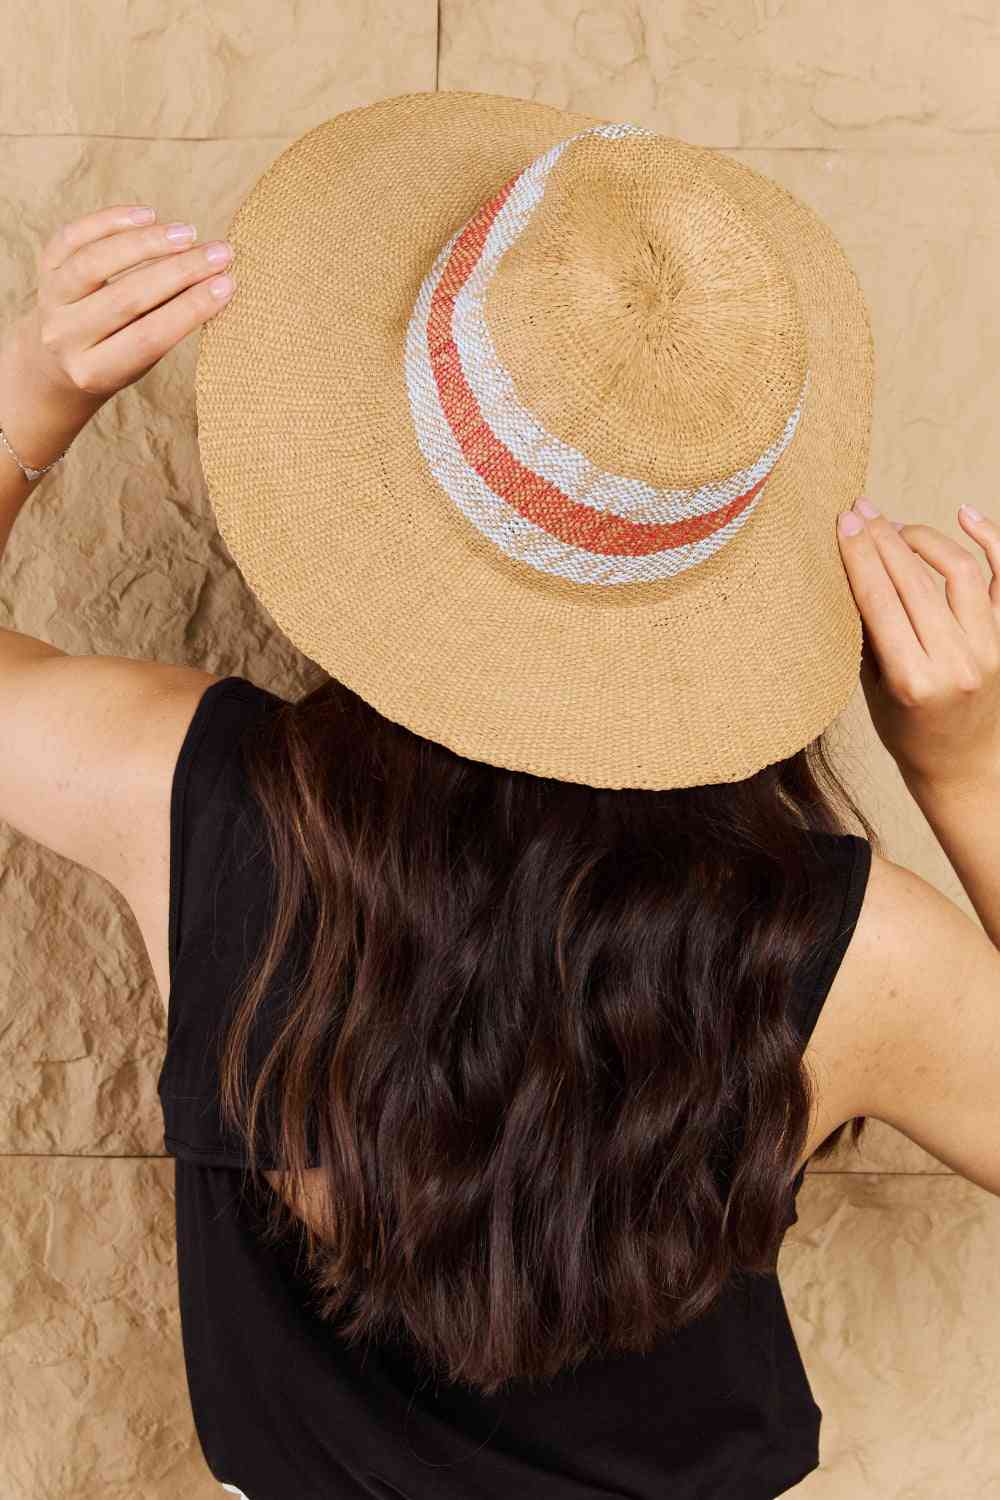 Fame Protect Me Vivid Glow Straw Sun Hat